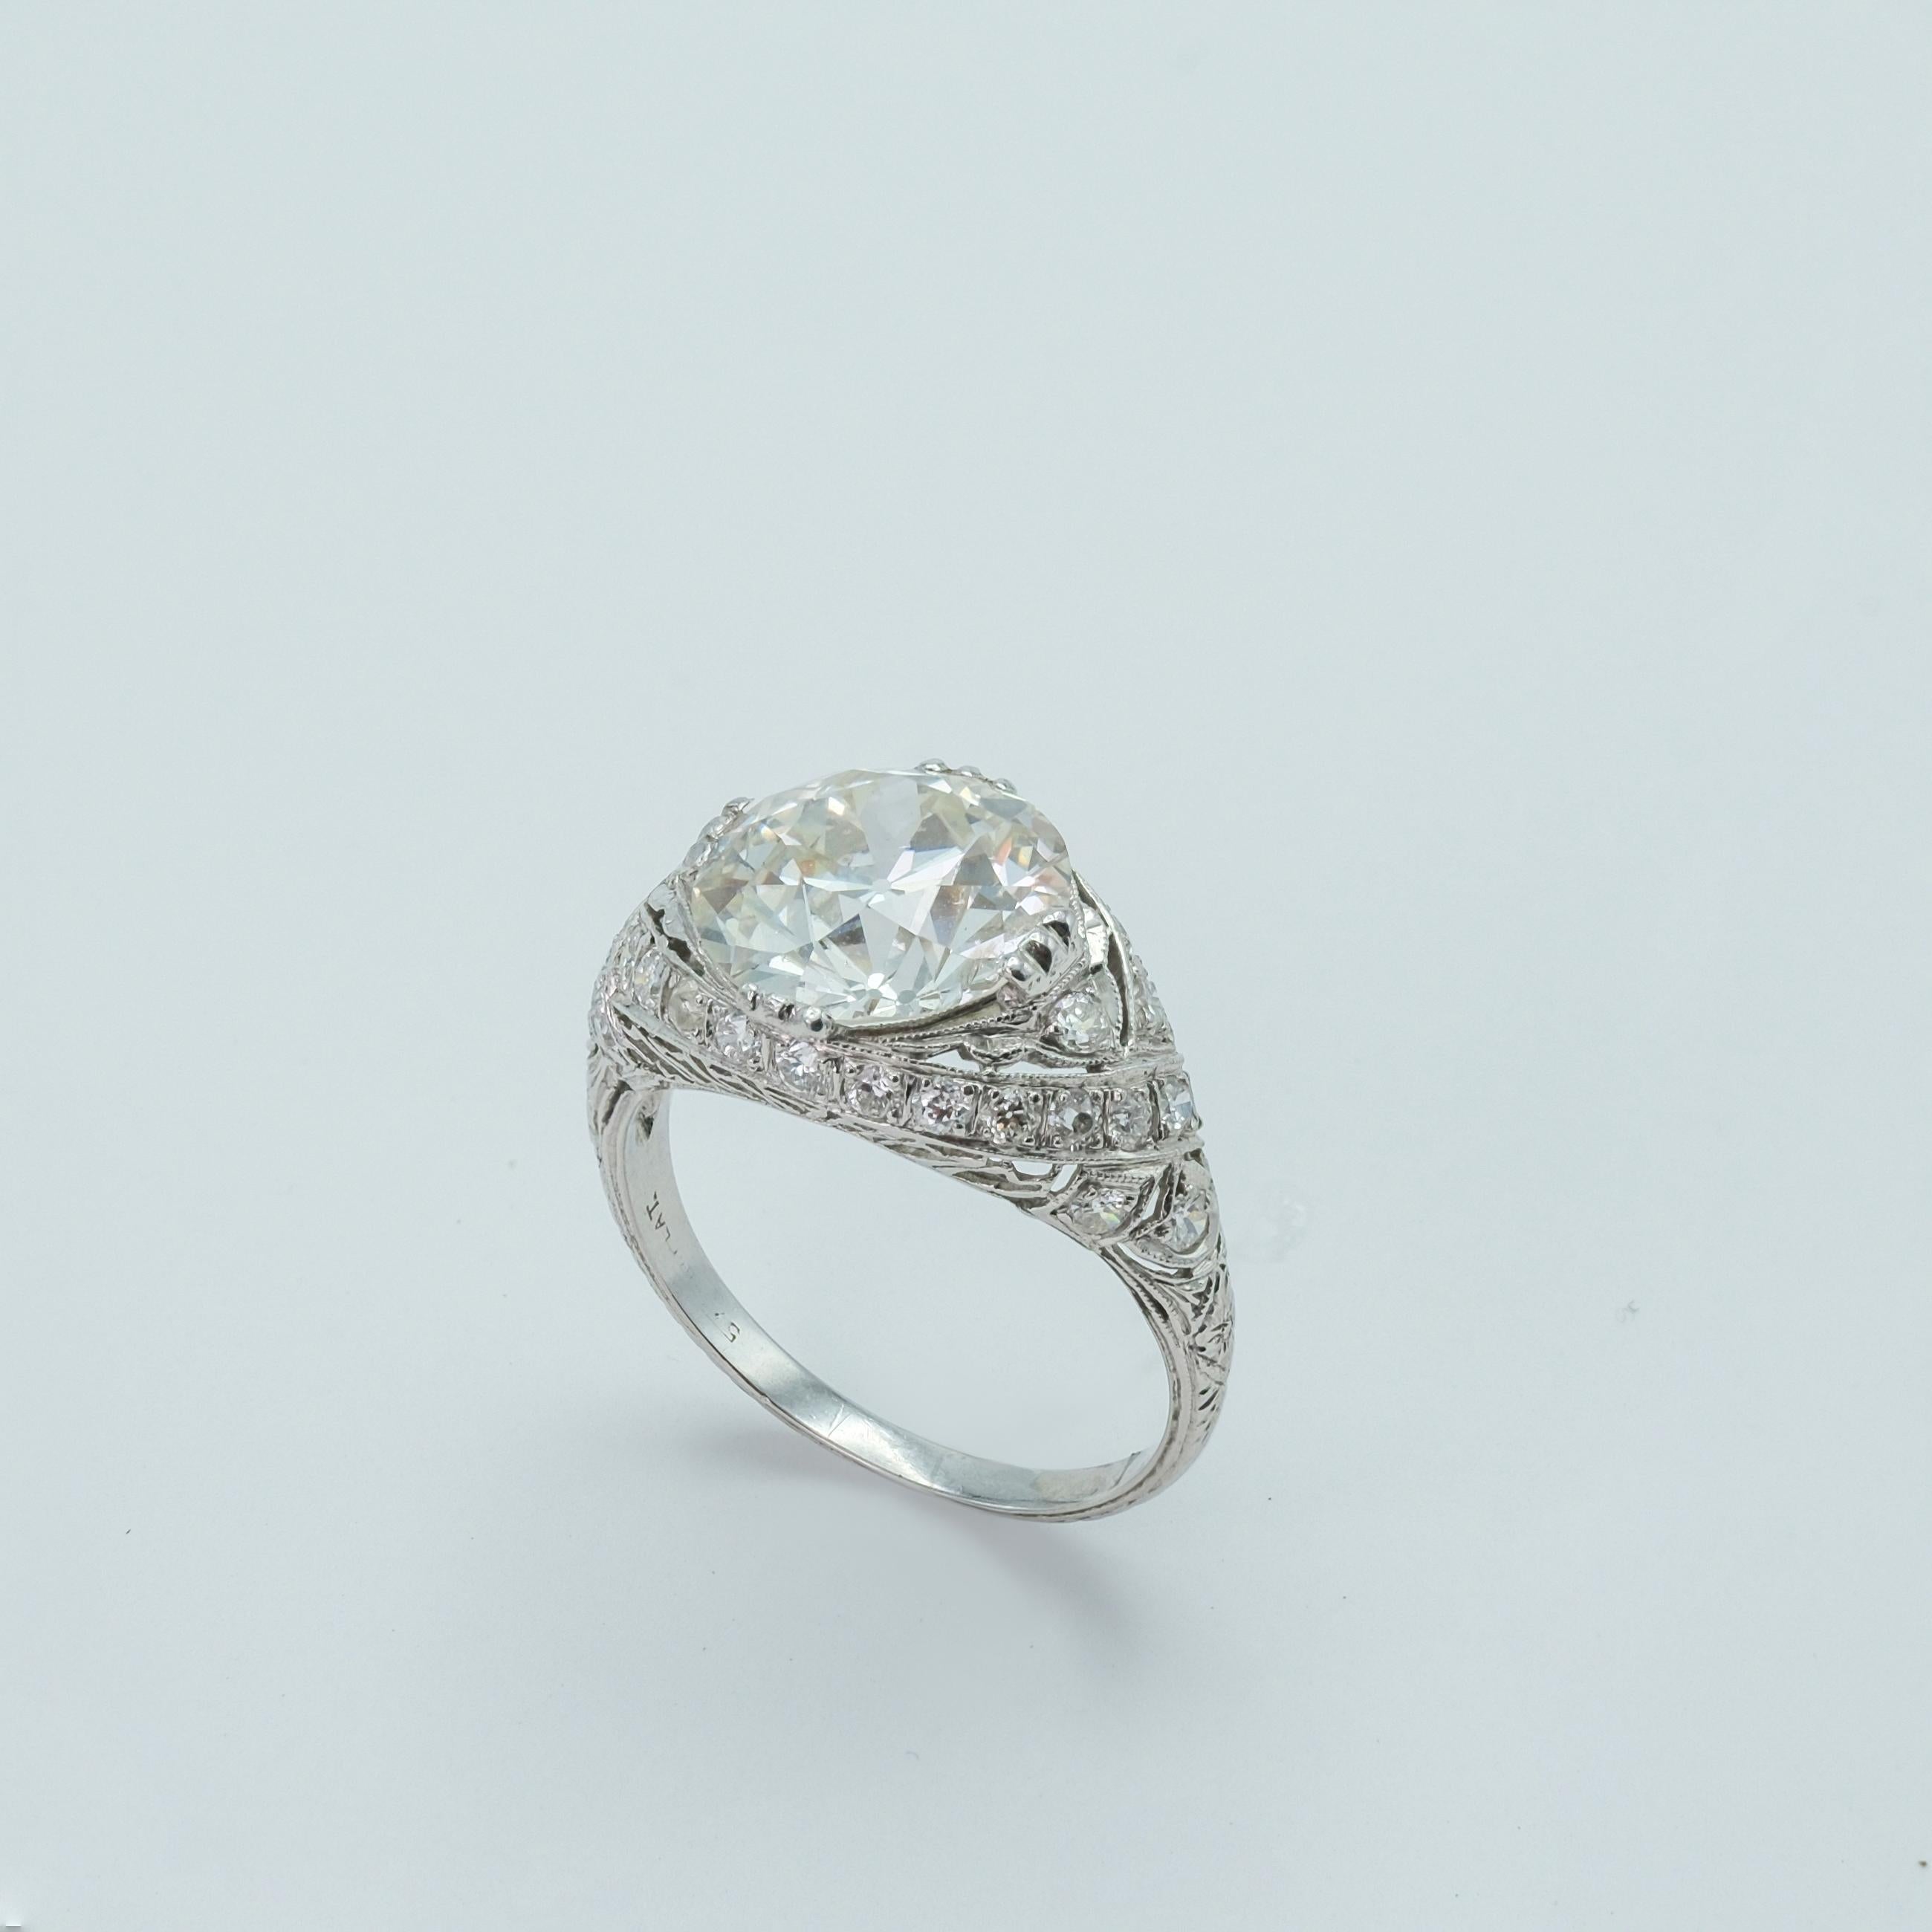 Antique Art Deco Platinum Old European Cut Diamond 4.14 Carat Ring In Excellent Condition For Sale In Fairfield, CT